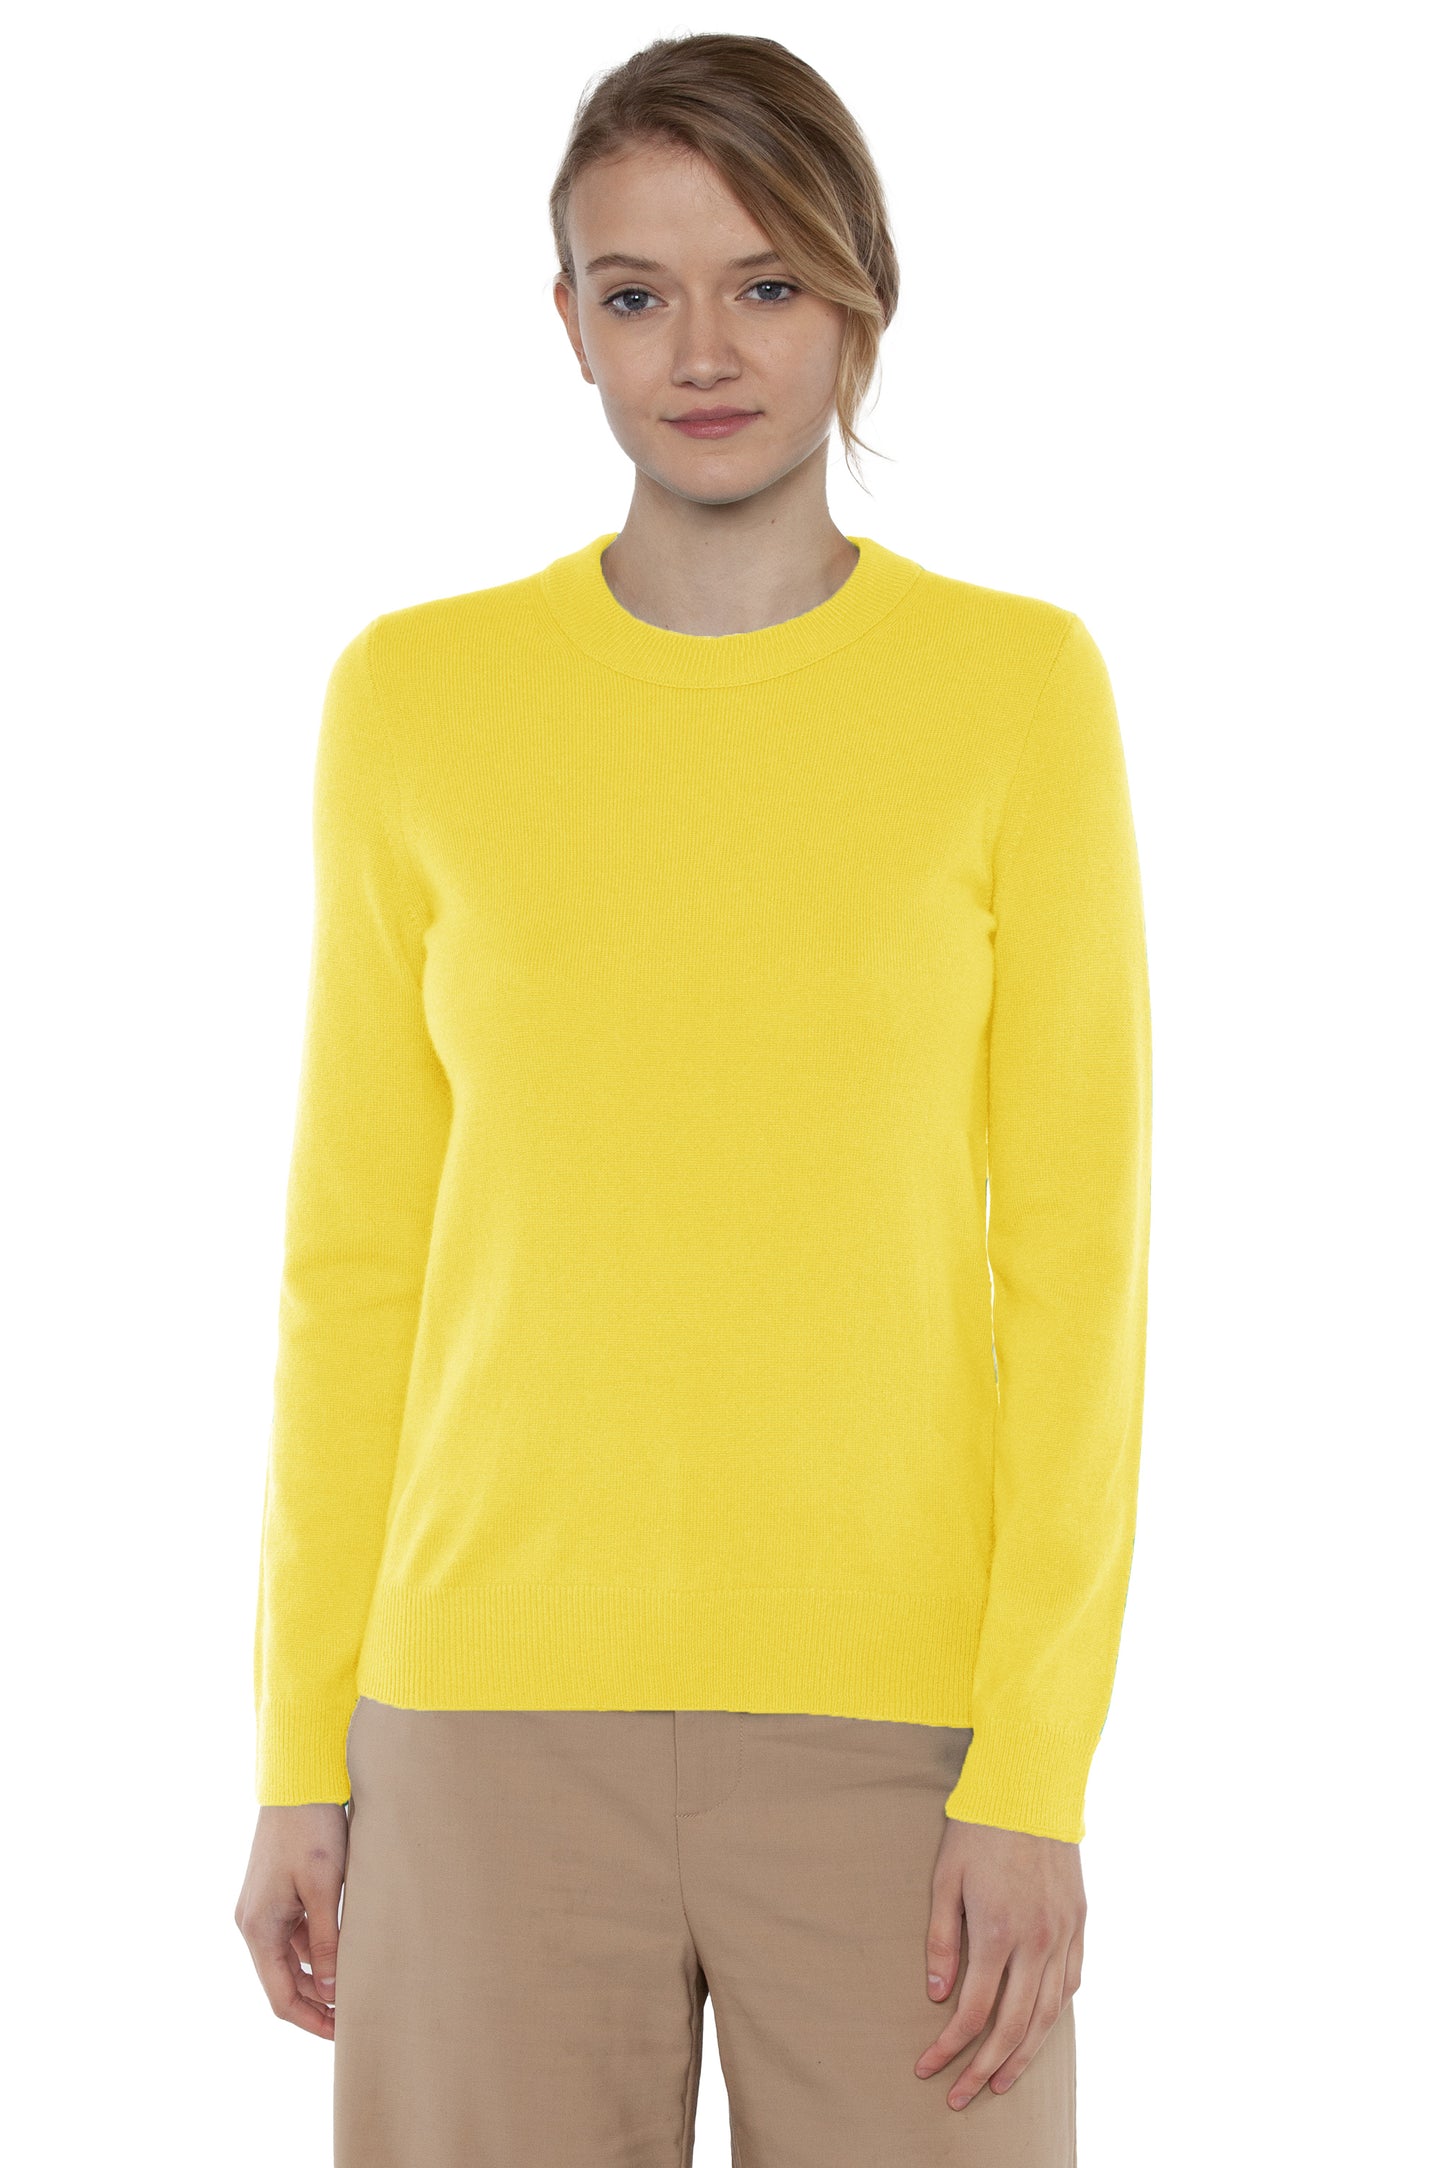 JENNIE LIU Women's 100% Cashmere Long Sleeve Crew Neck Sweater